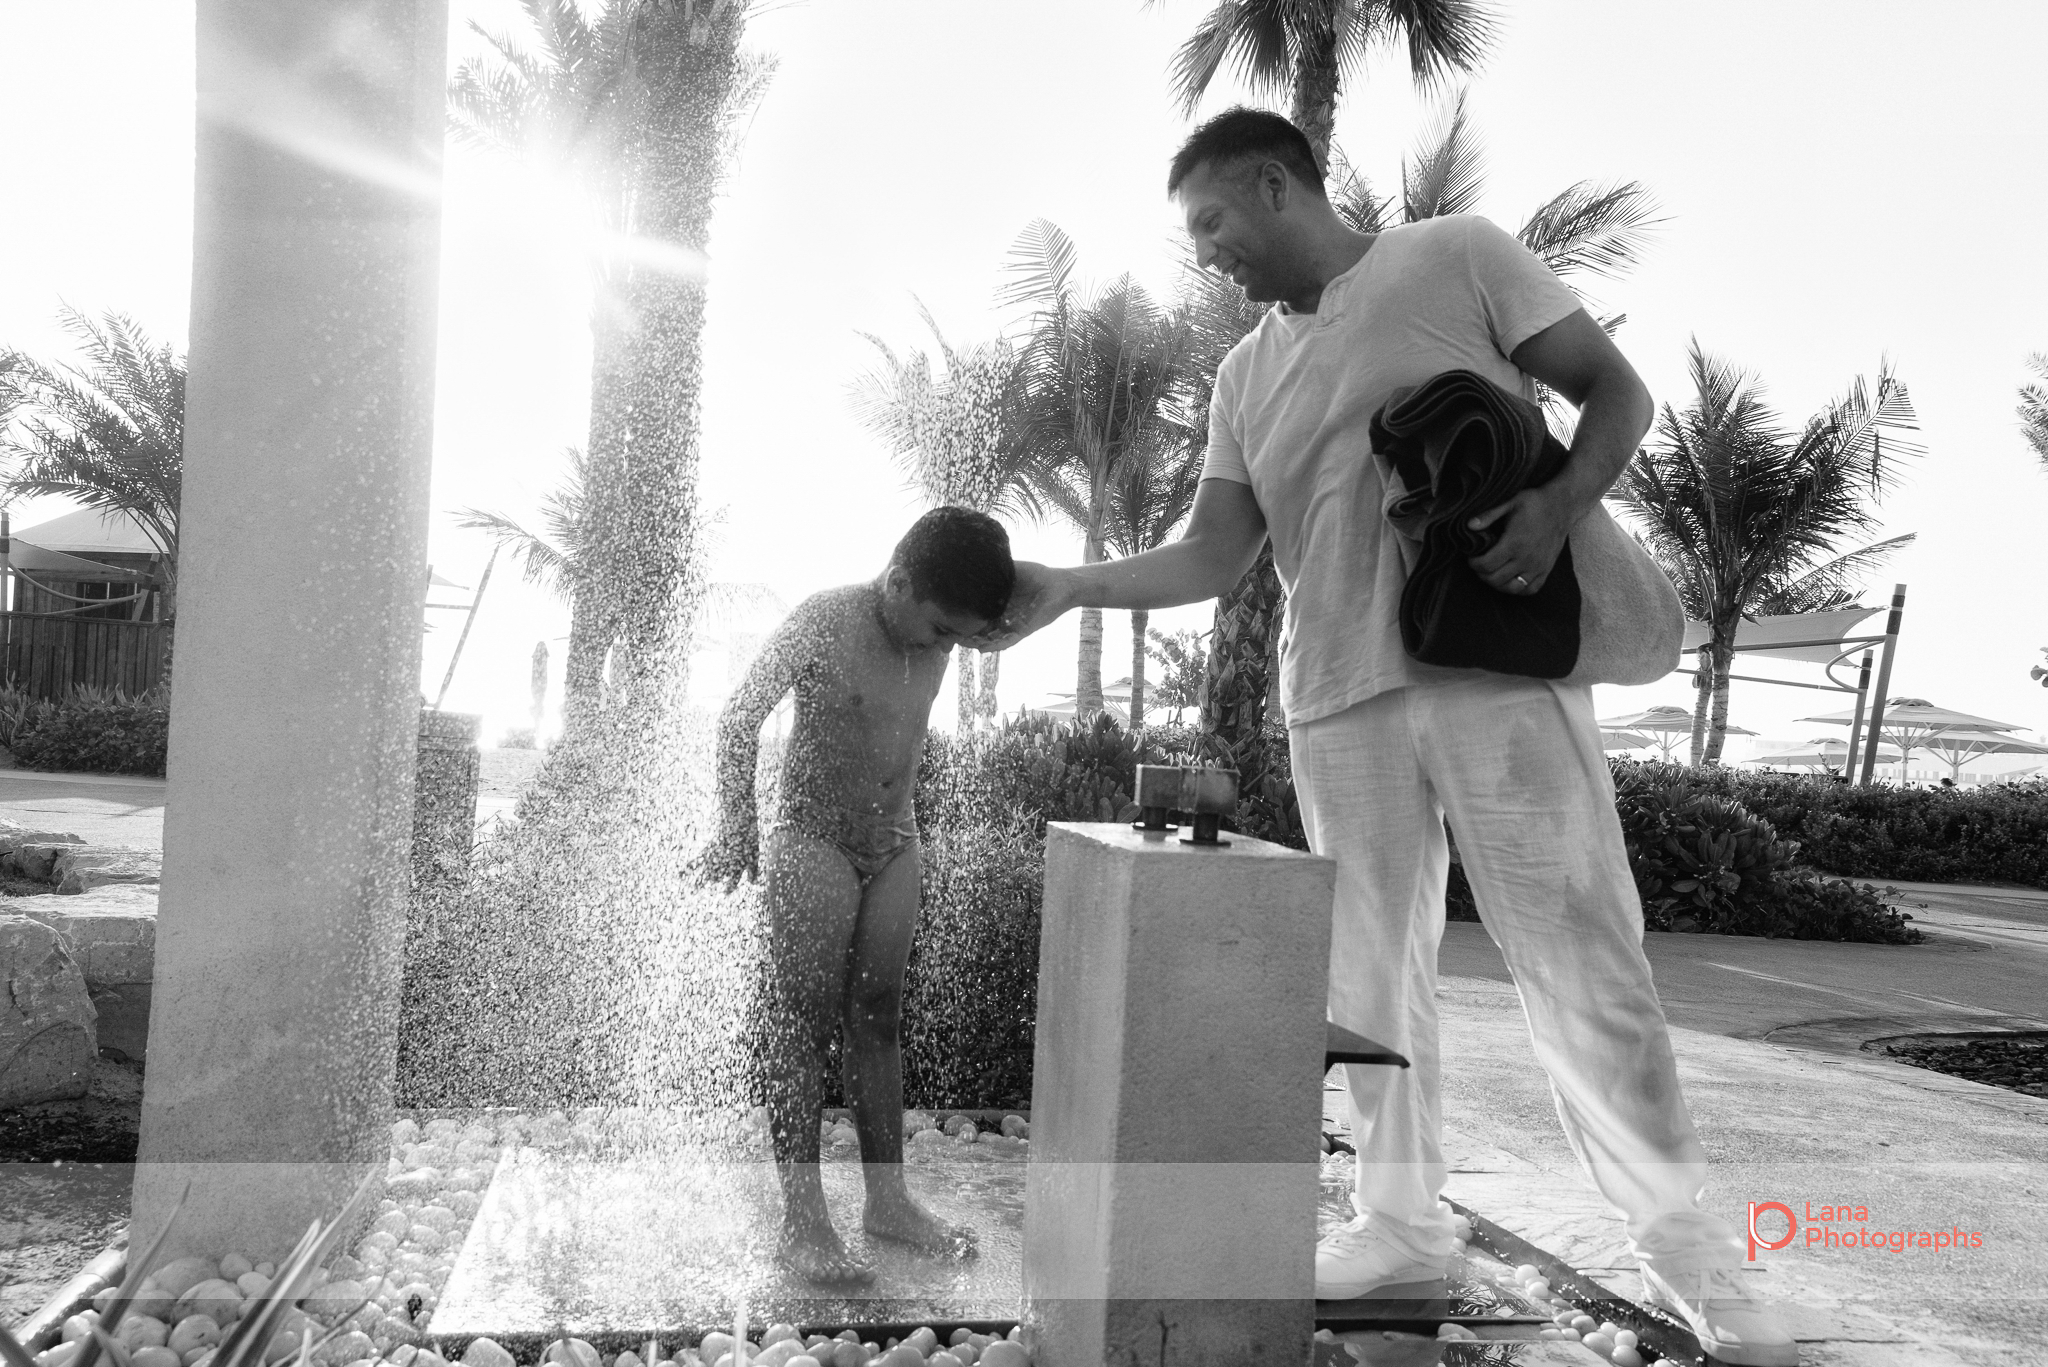  Lana Photographs Dubai Family Photography beach photoshoot father washes sand off son 